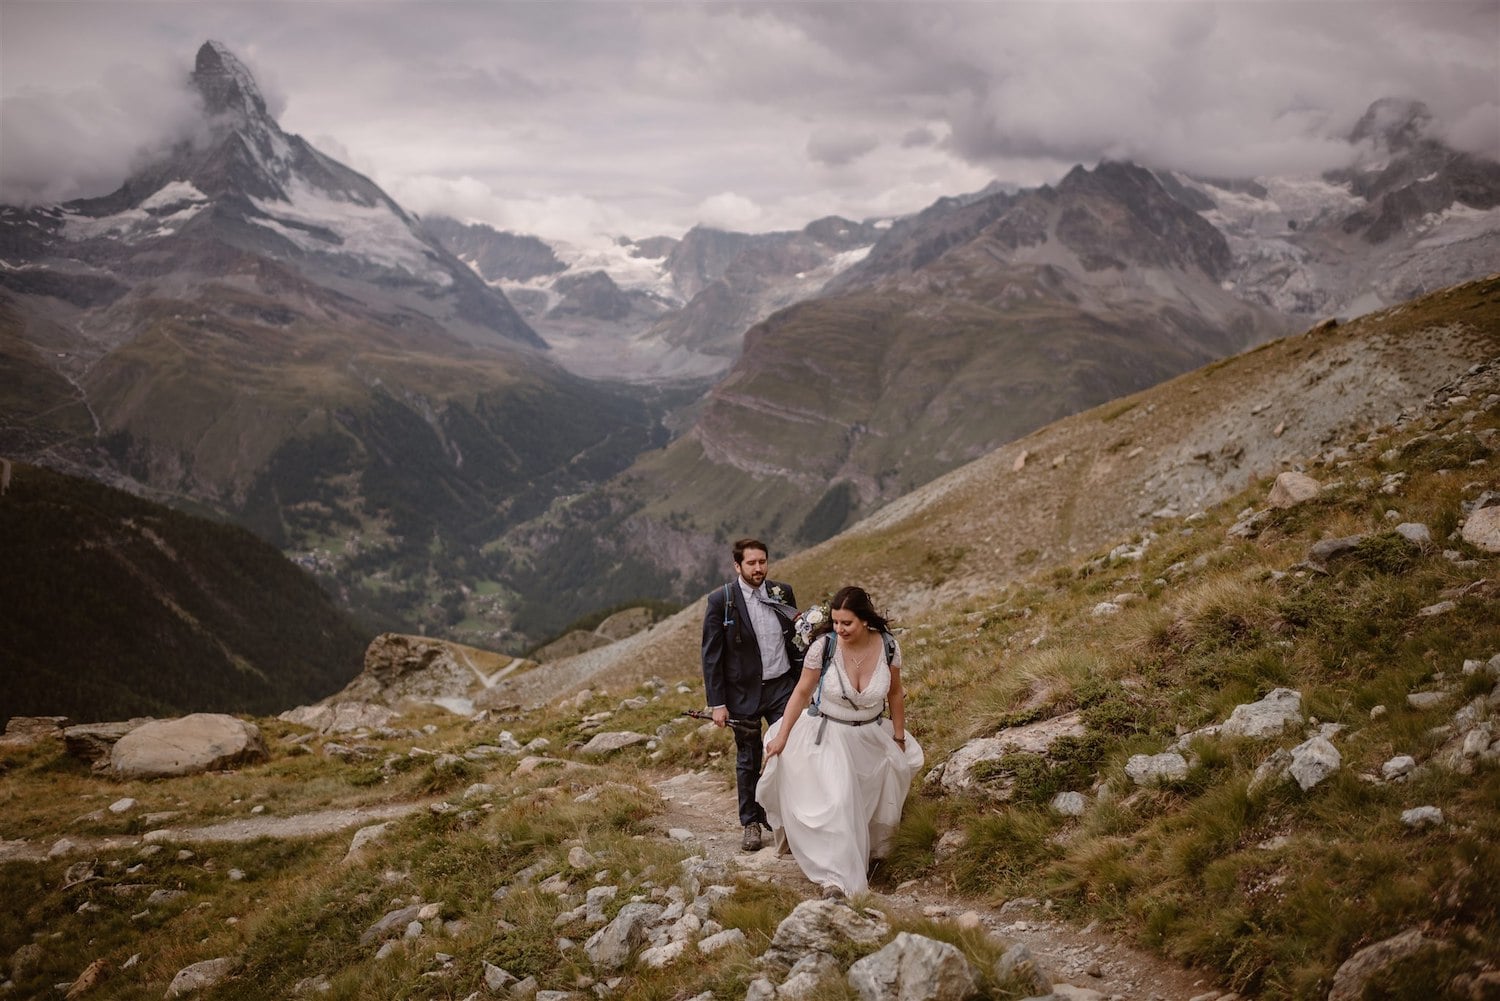 An elopement in the Swiss mountains in Zermatt, Switzerland